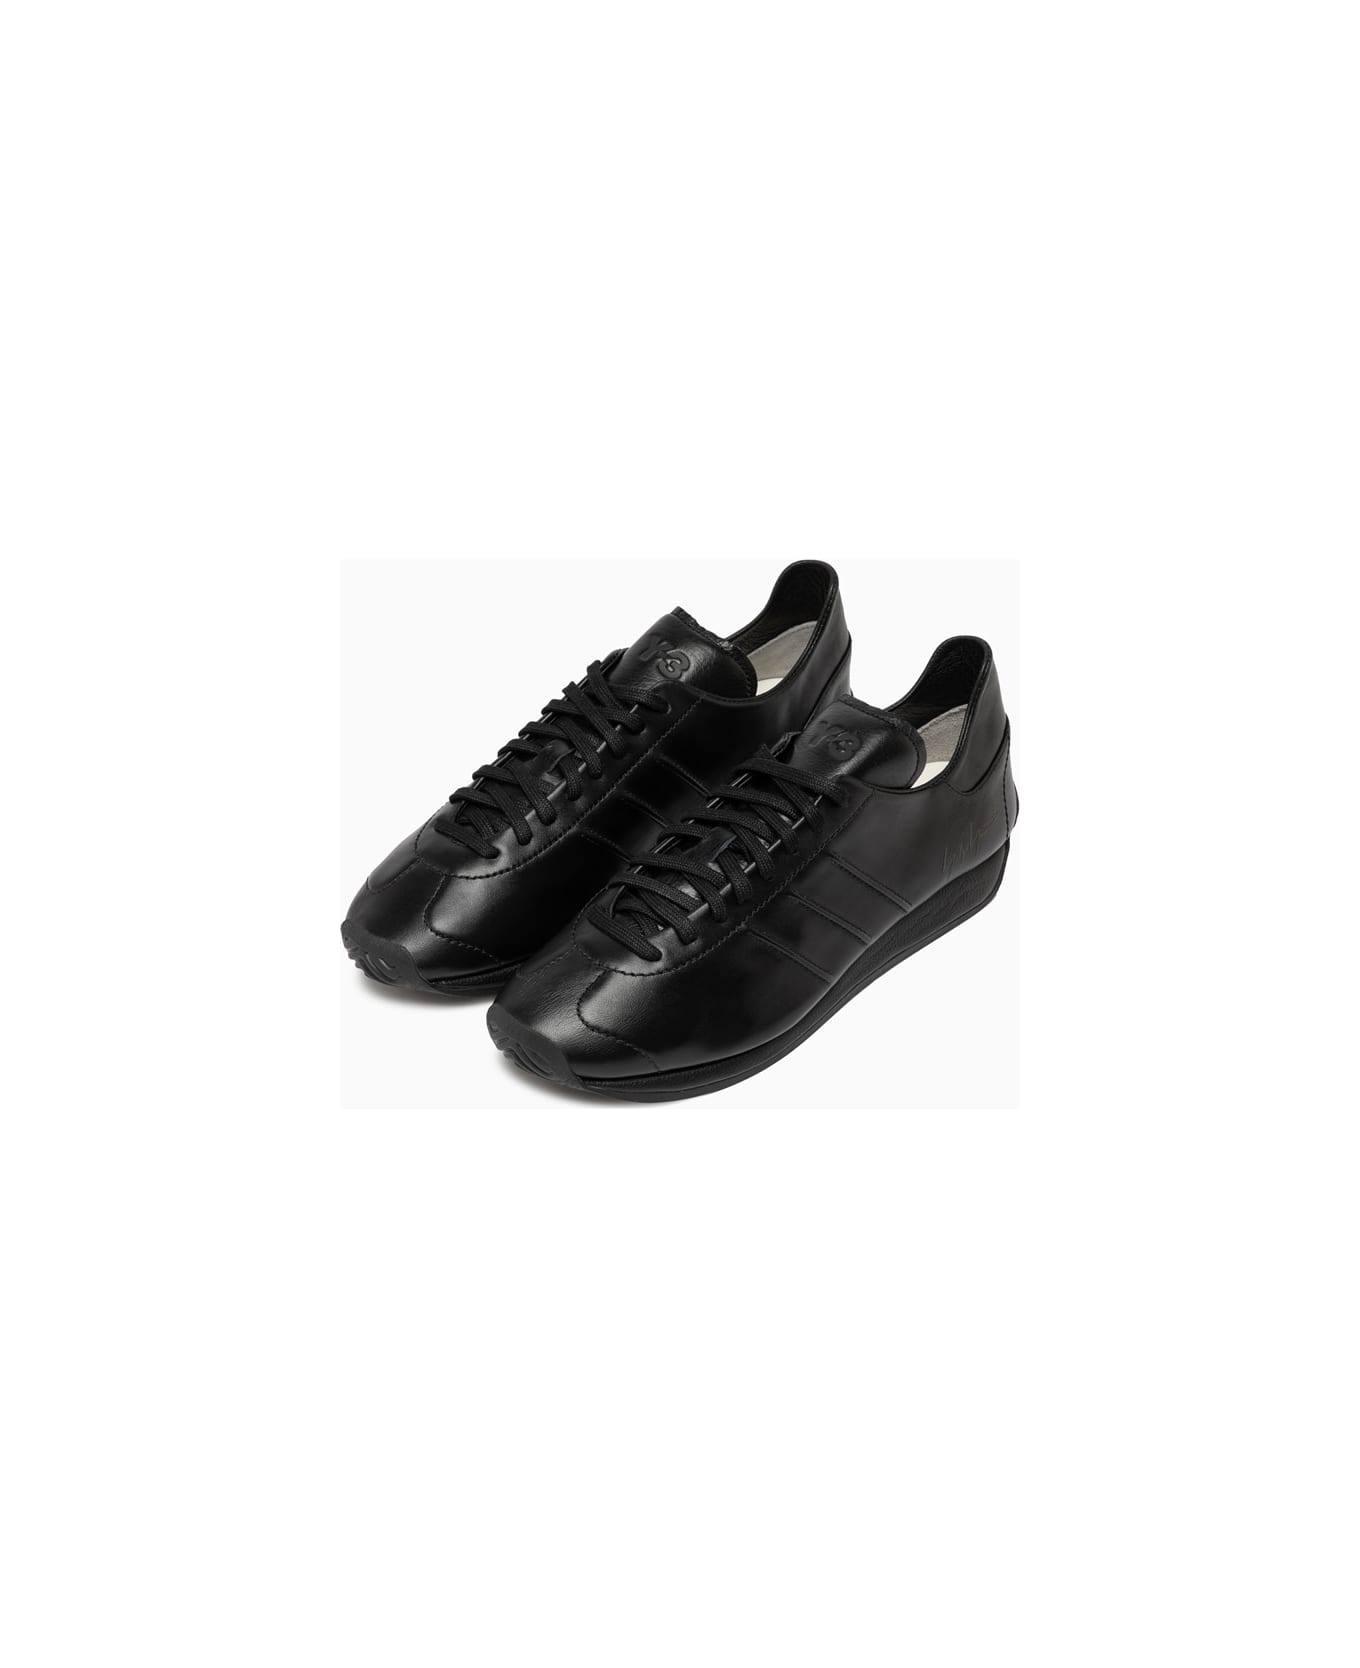 Y-3 Adidas Y-3 Country Sneakers Ie5697 - Black